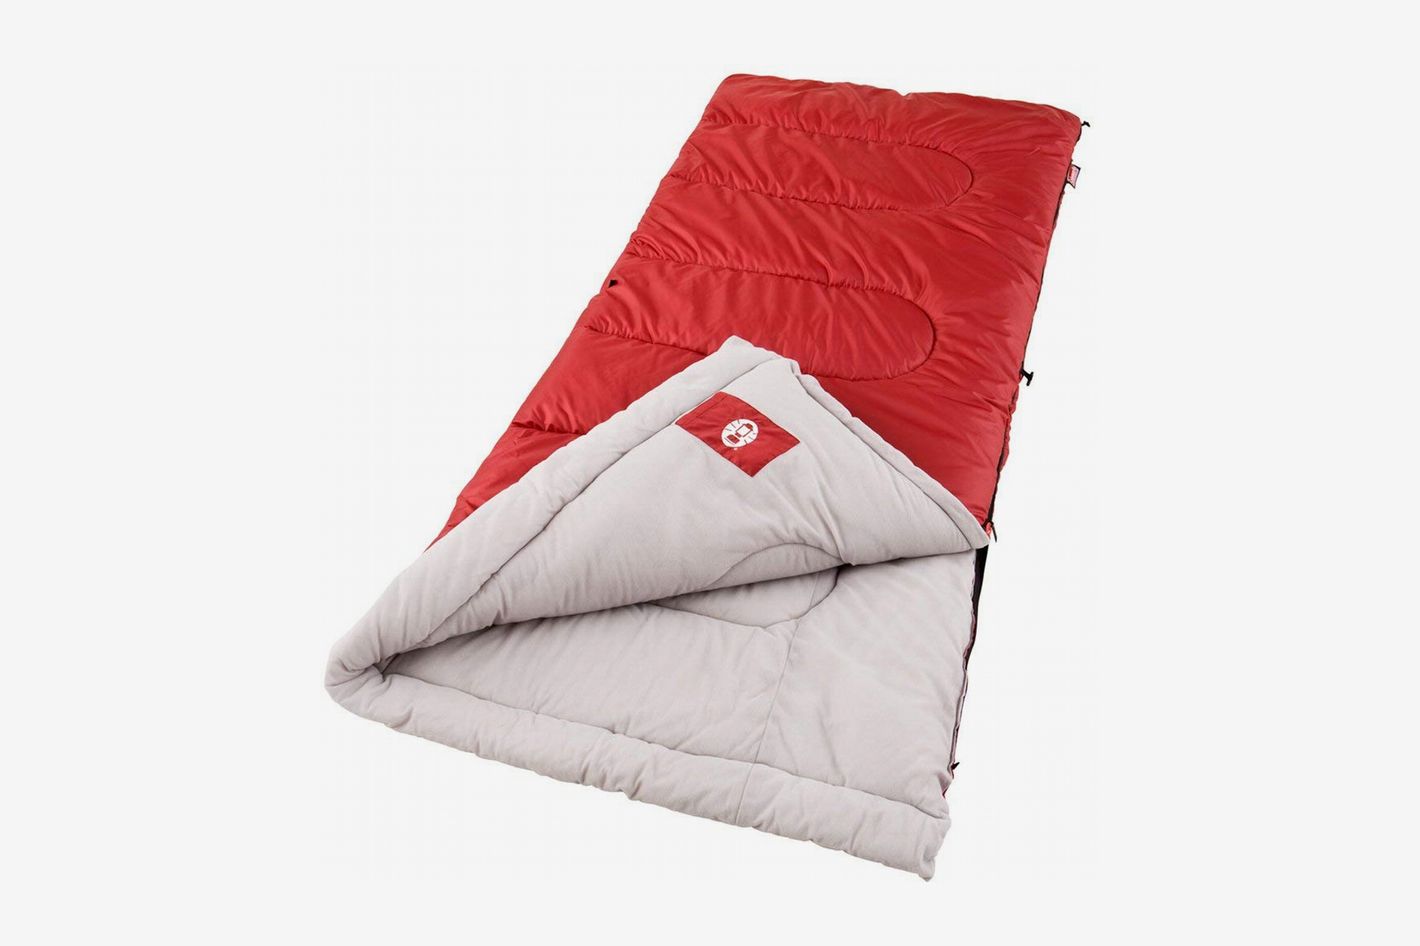 a sleeping bag - www.bruhm.com.